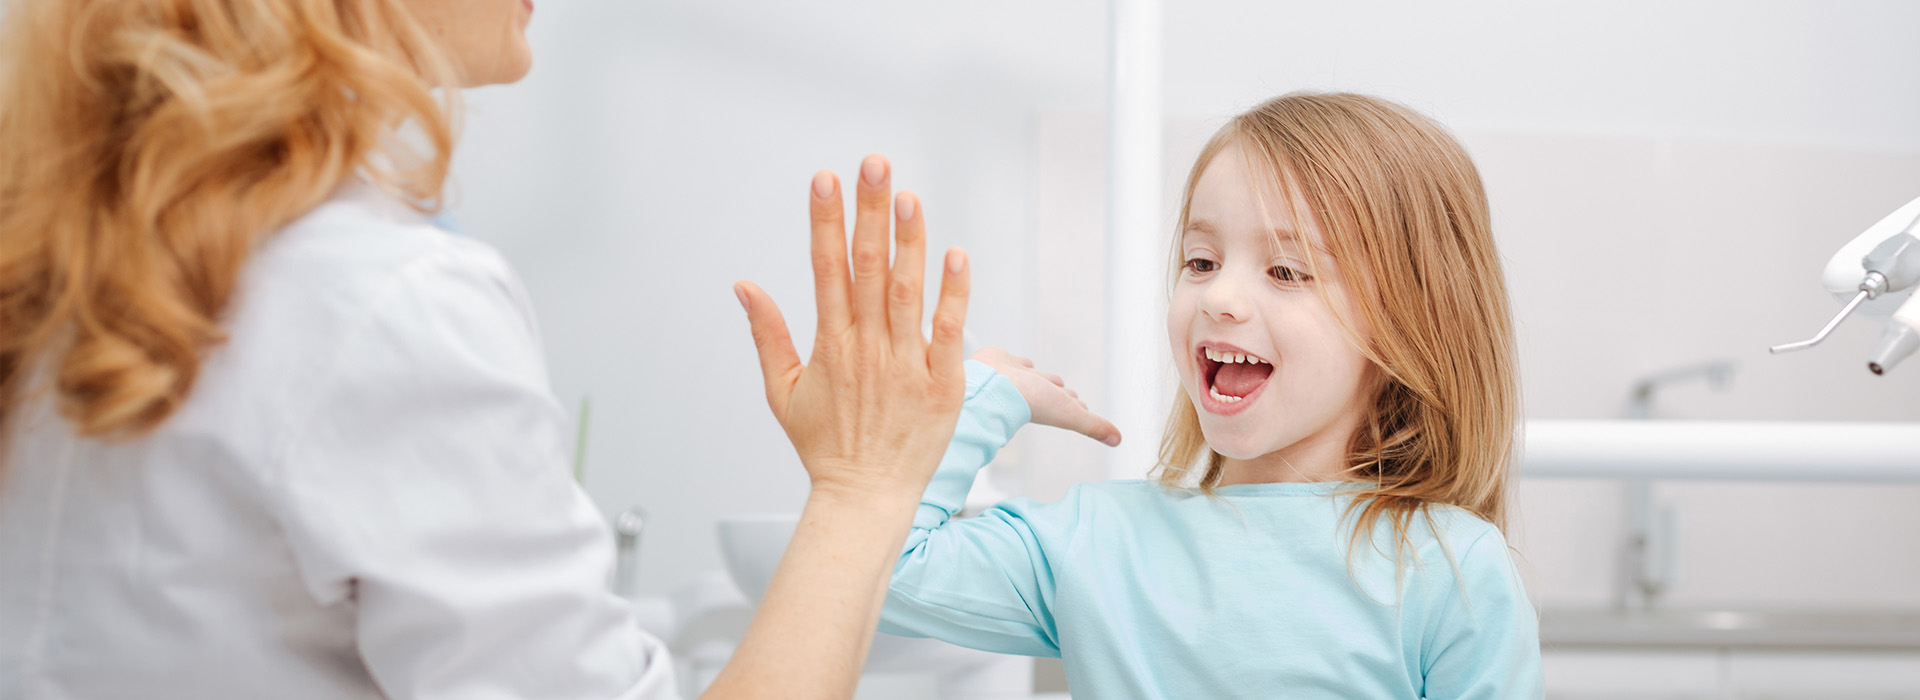 Bethesda Rock Dental | Cosmetic Dentistry, Dentures and Pediatric Dentistry